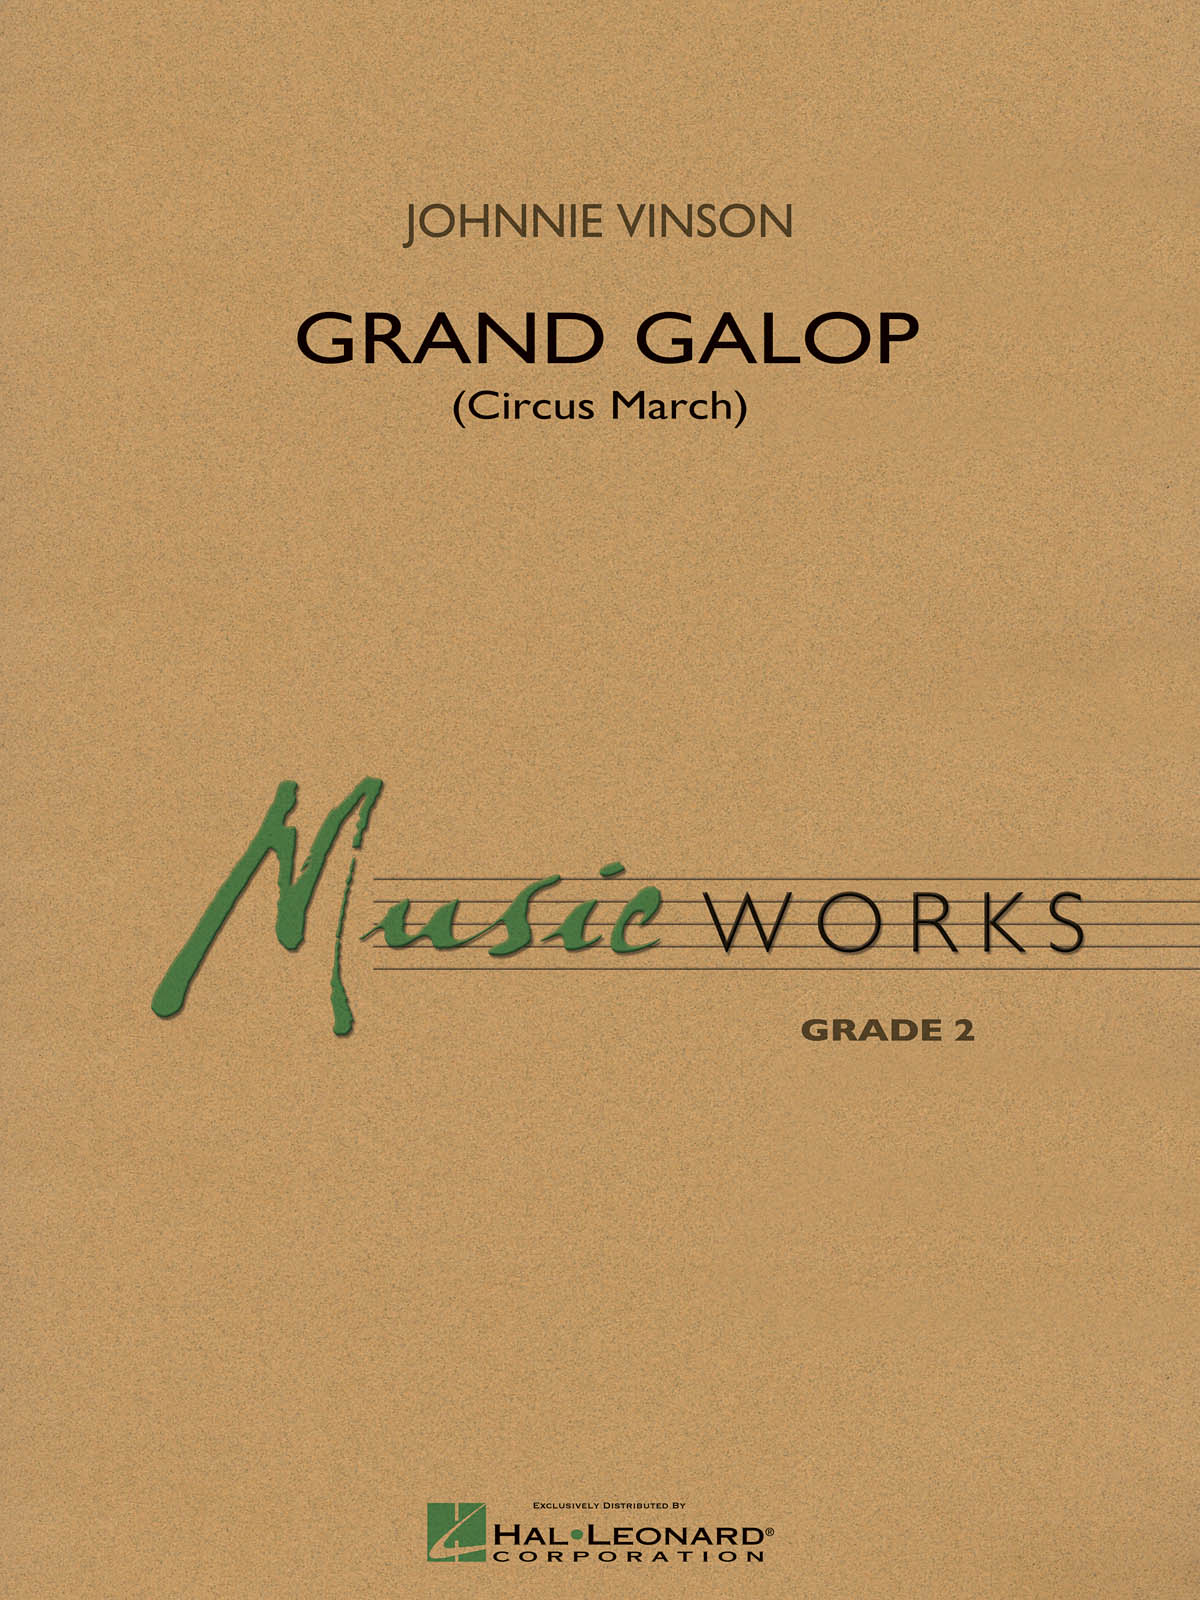 Johnnie Vinson: Grand Galop  (Circus March): Concert Band: Score & Parts